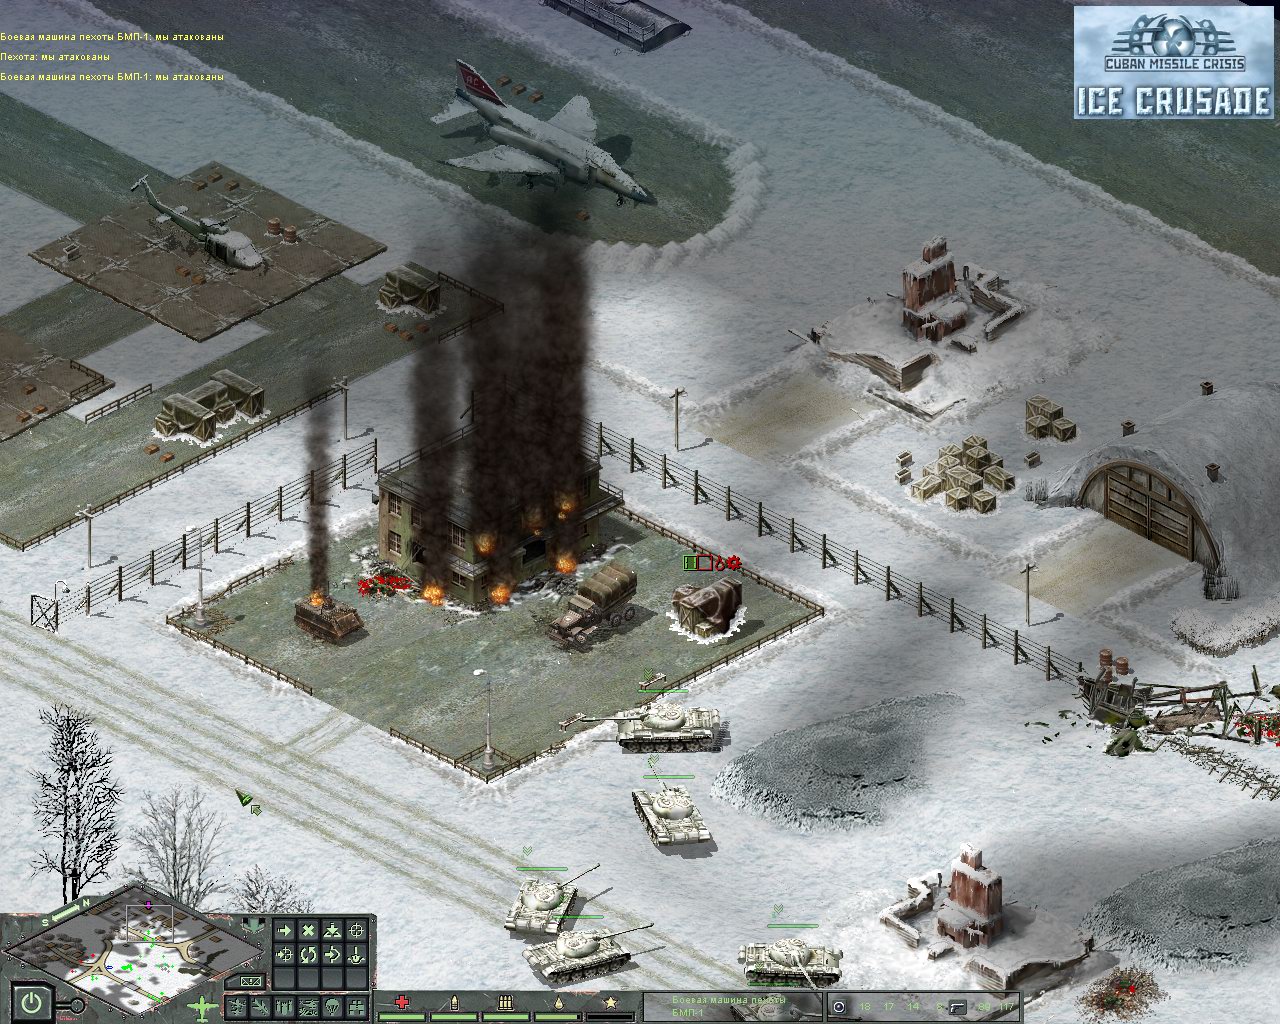 Cuban Missile Crisis: Ice Crusade screenshot